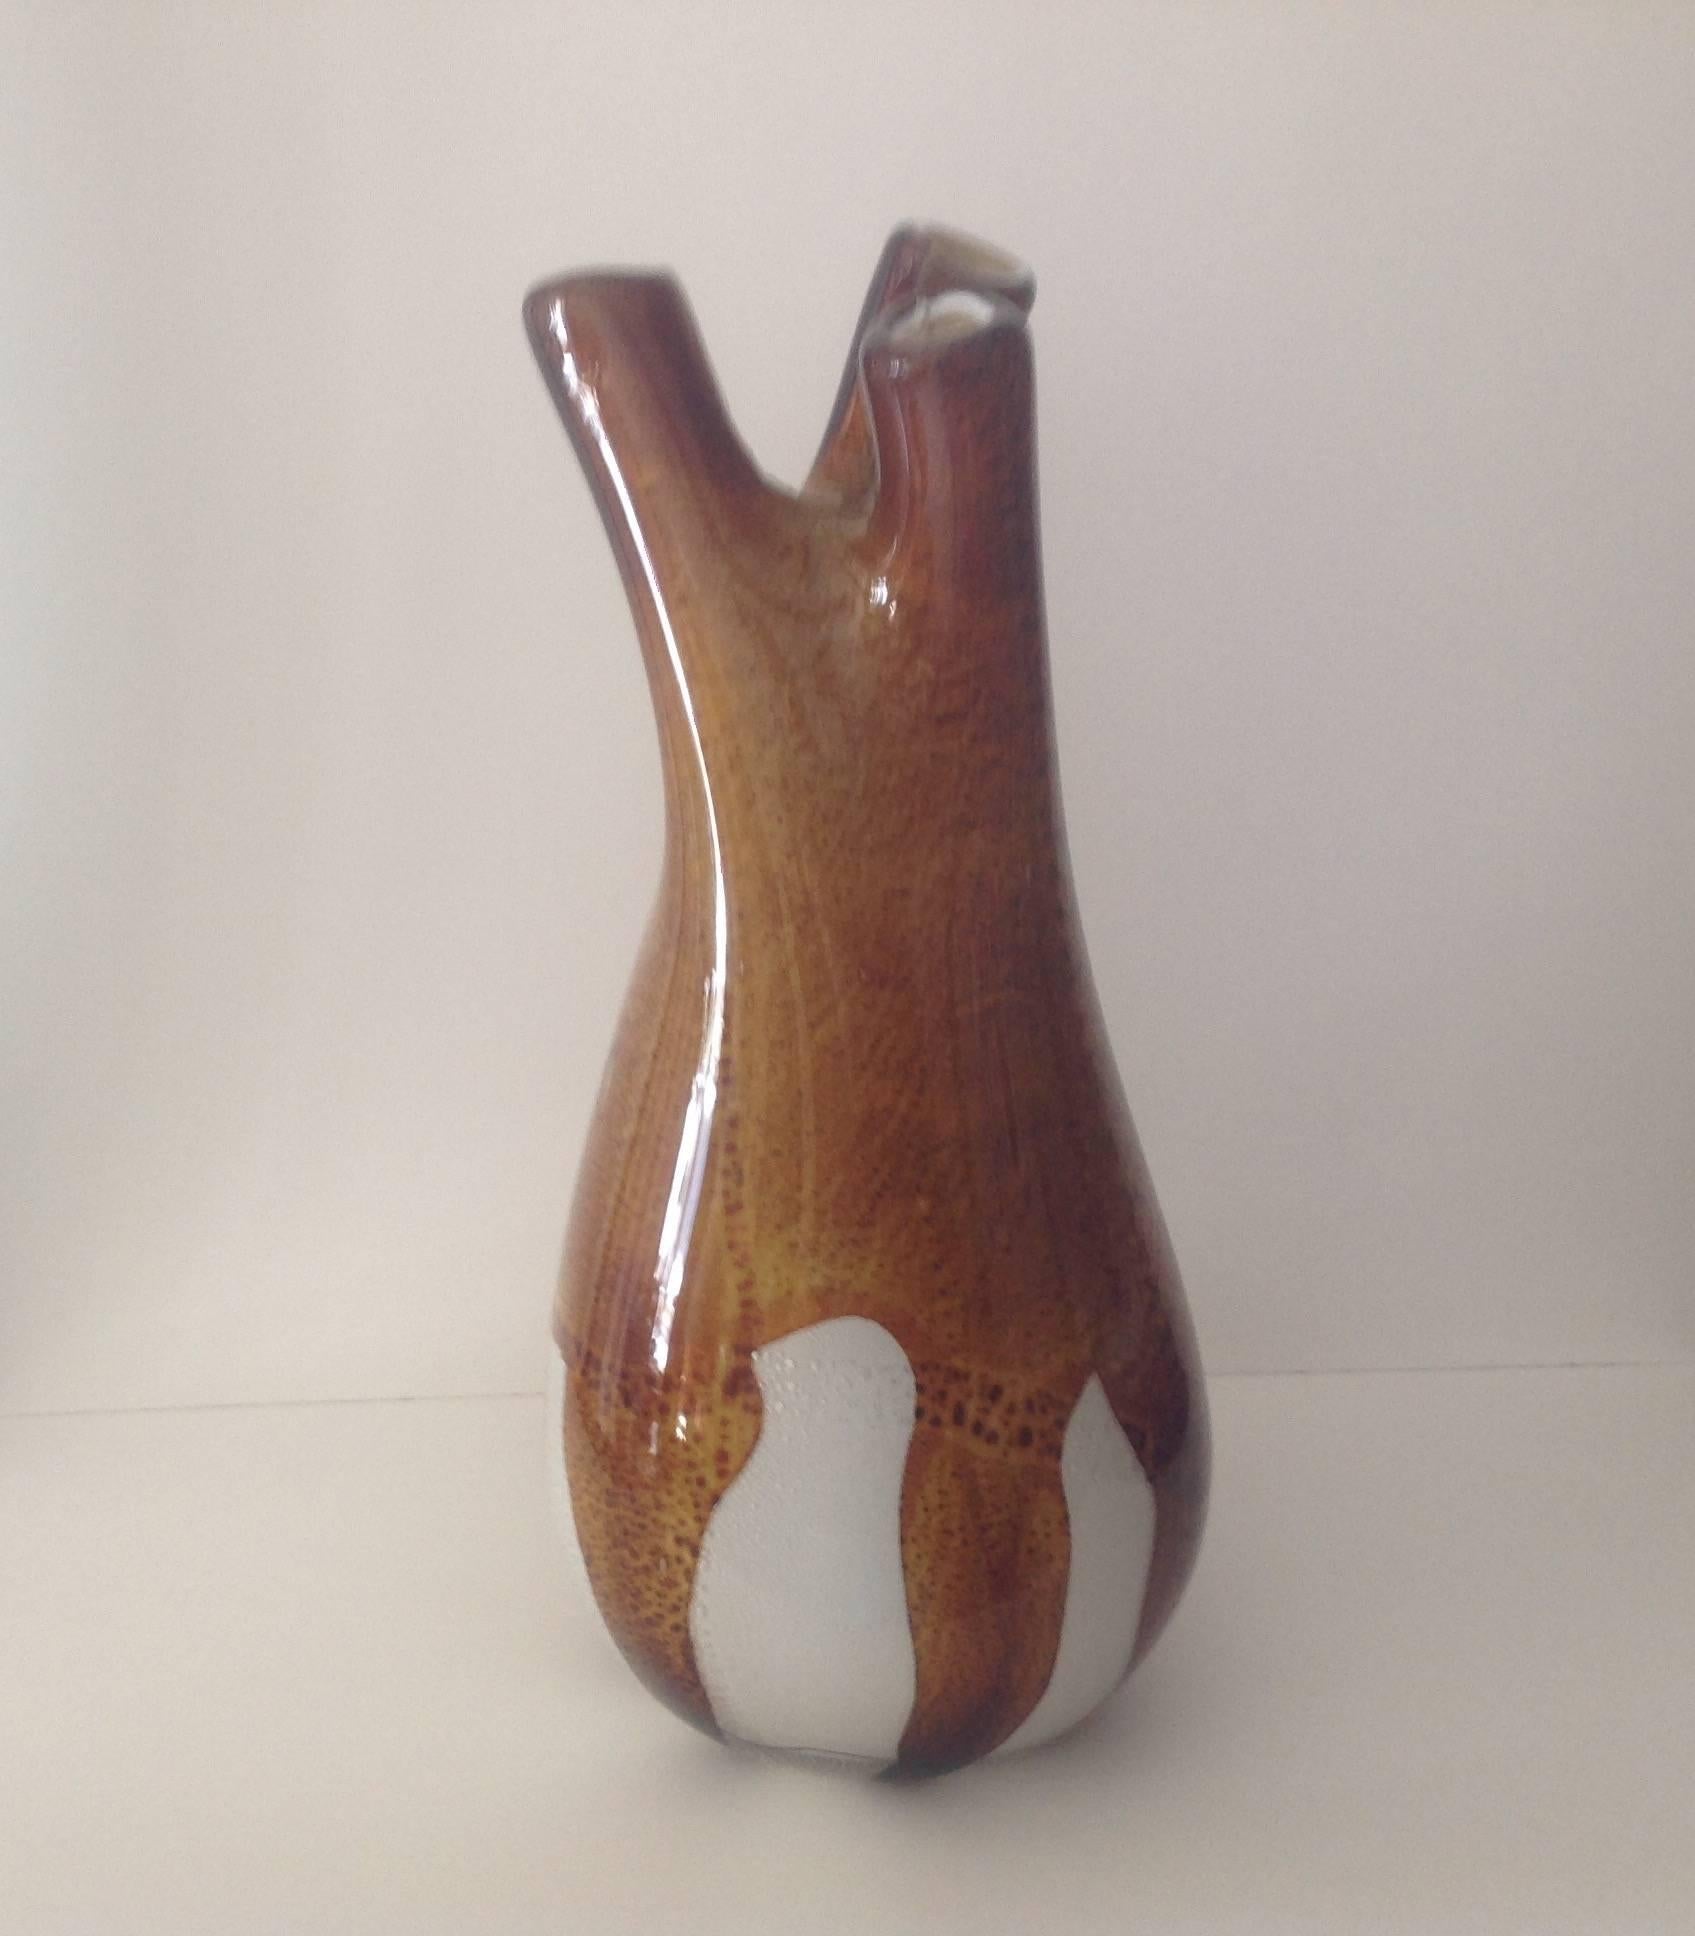 Rare and large three necked vase by Aldo Nason for Avem.